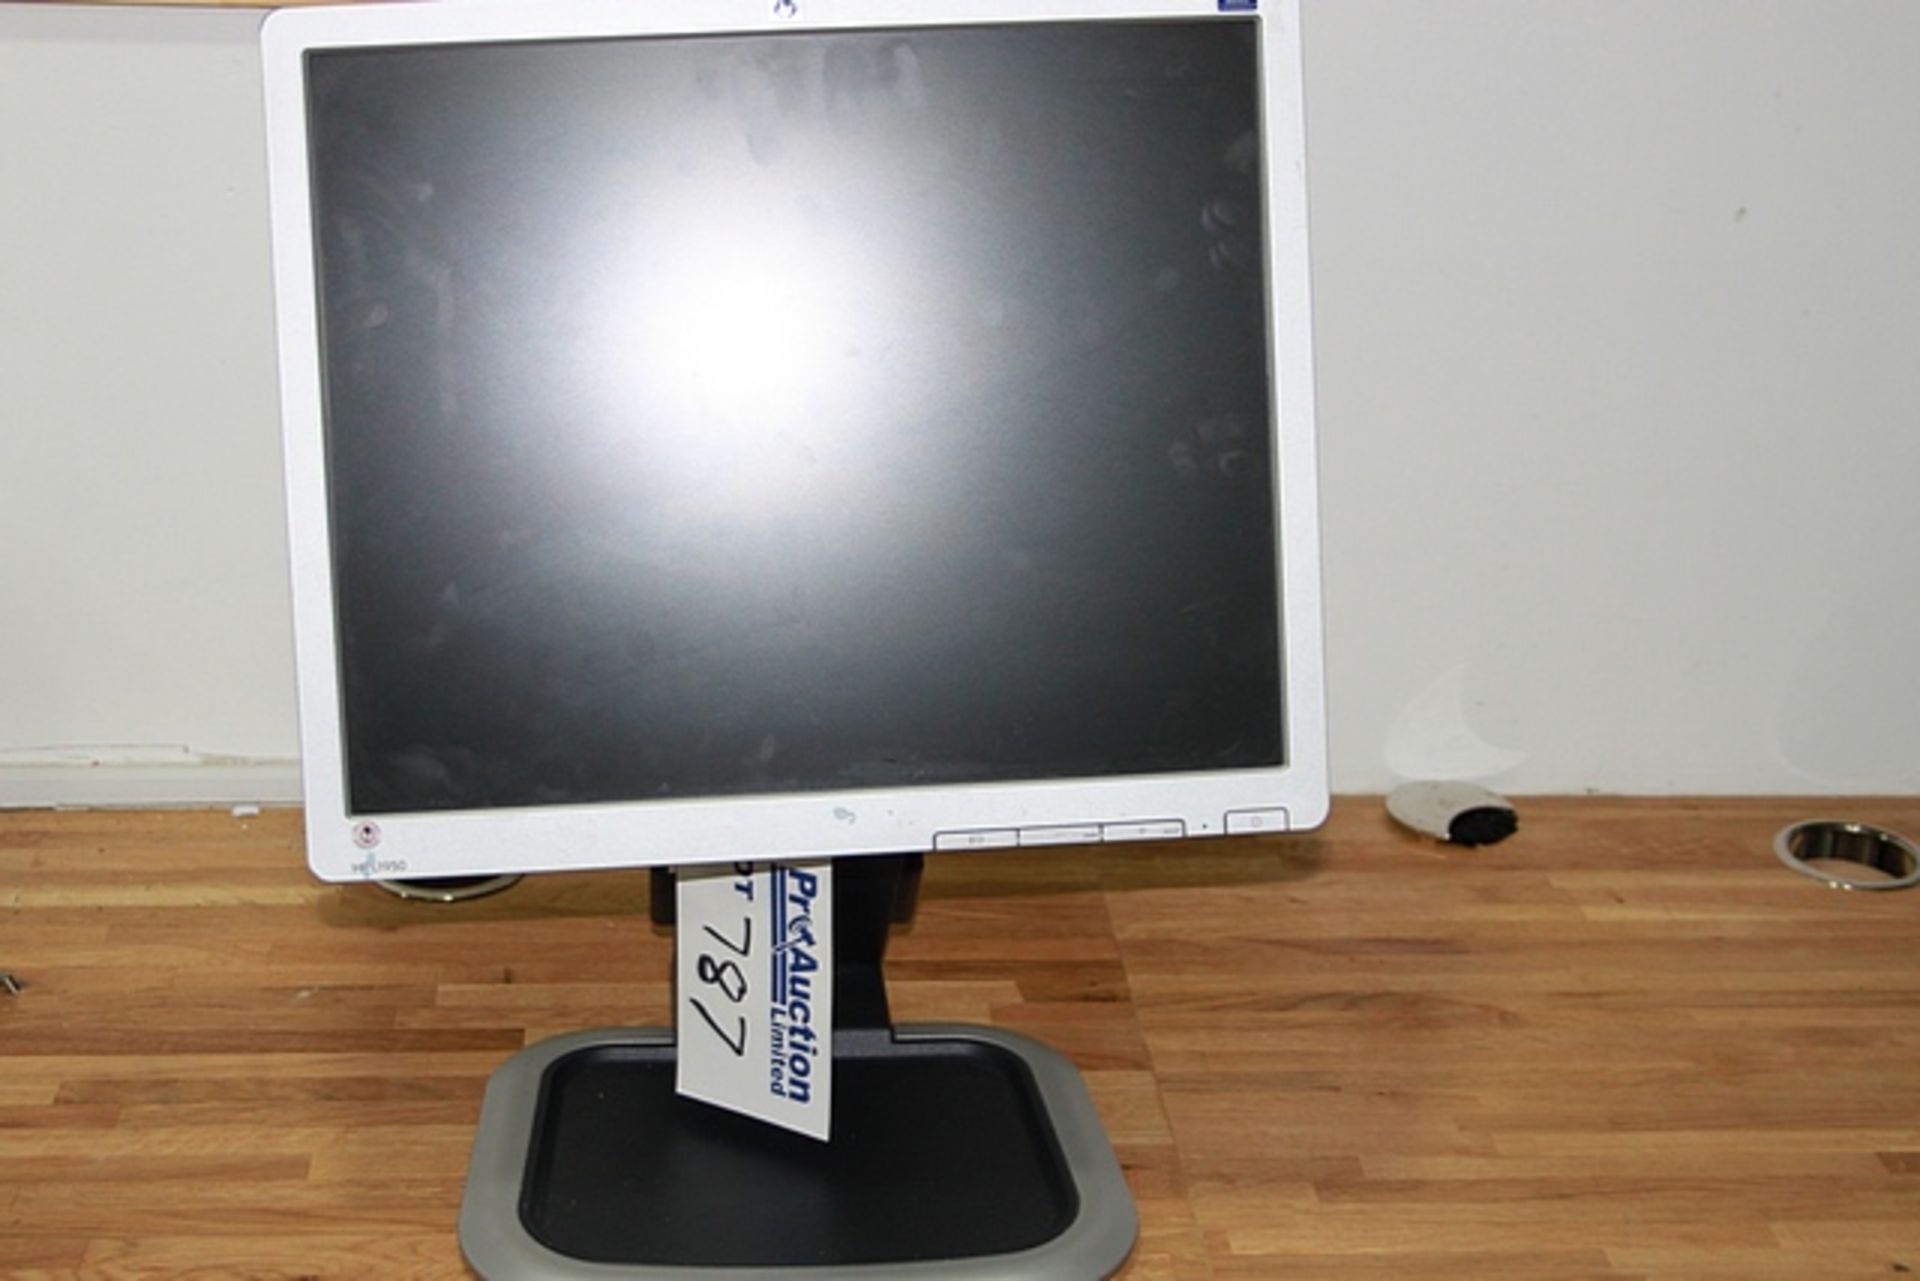 HP L1950 19.0-inch TFT Active Matrix LCD Flat Panel Display 1280x1024 / 75Hz with USB Hub